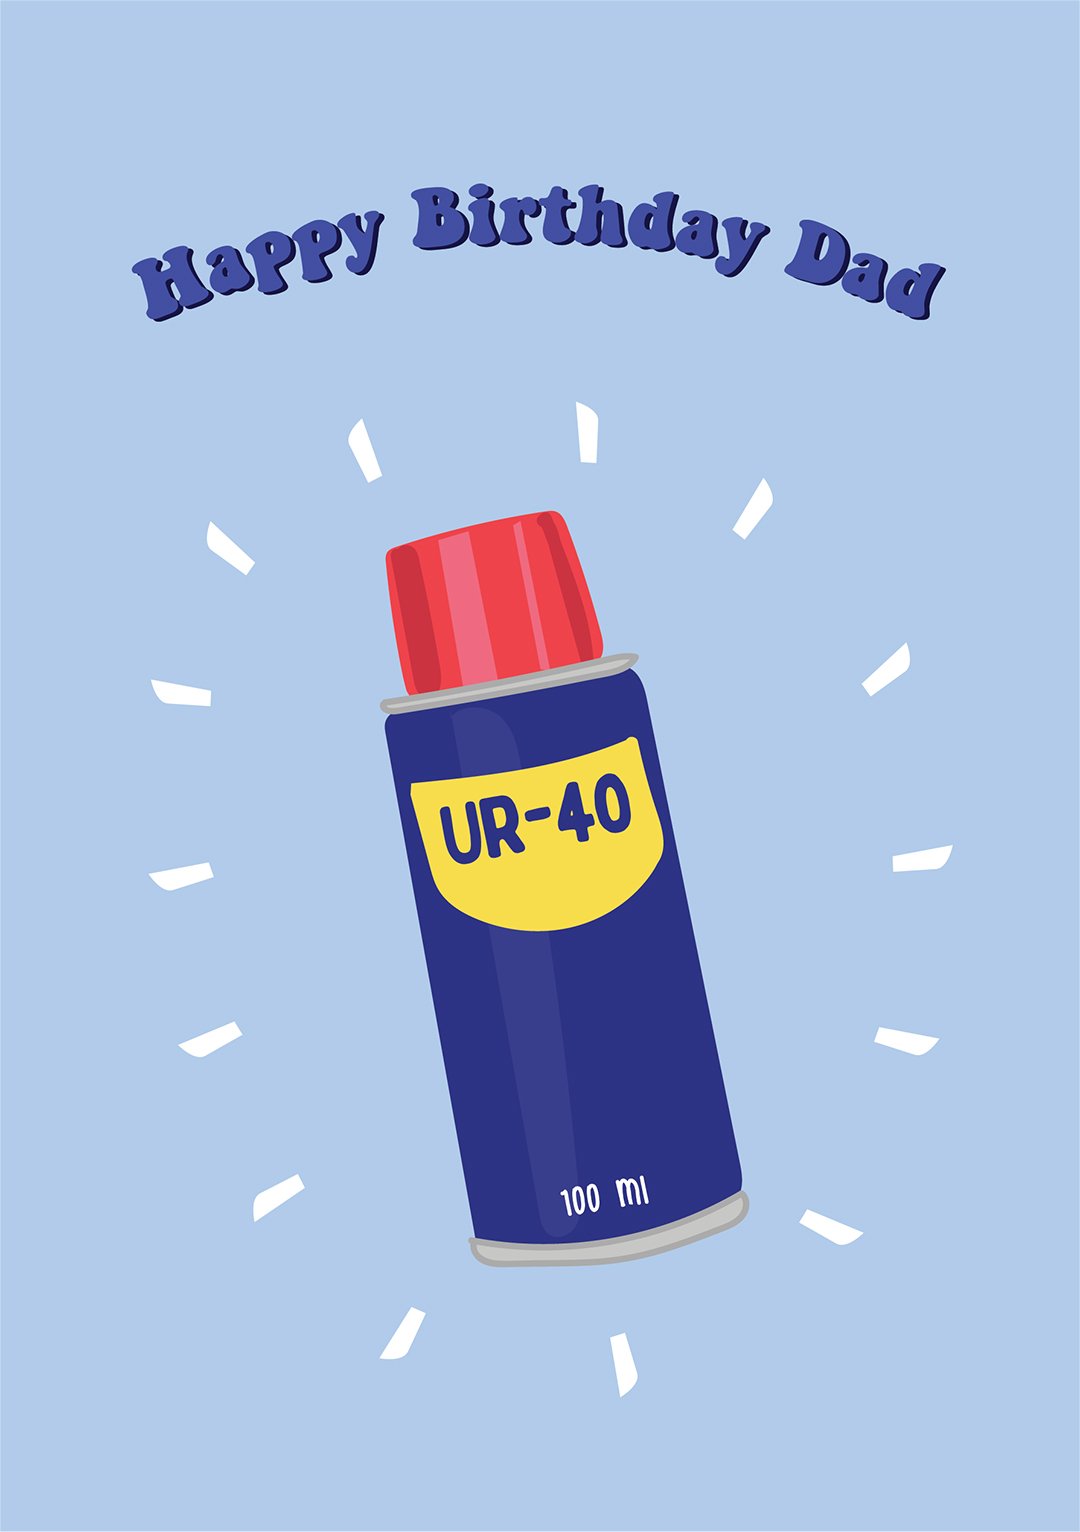 Happy Birthday Dad - UR-40